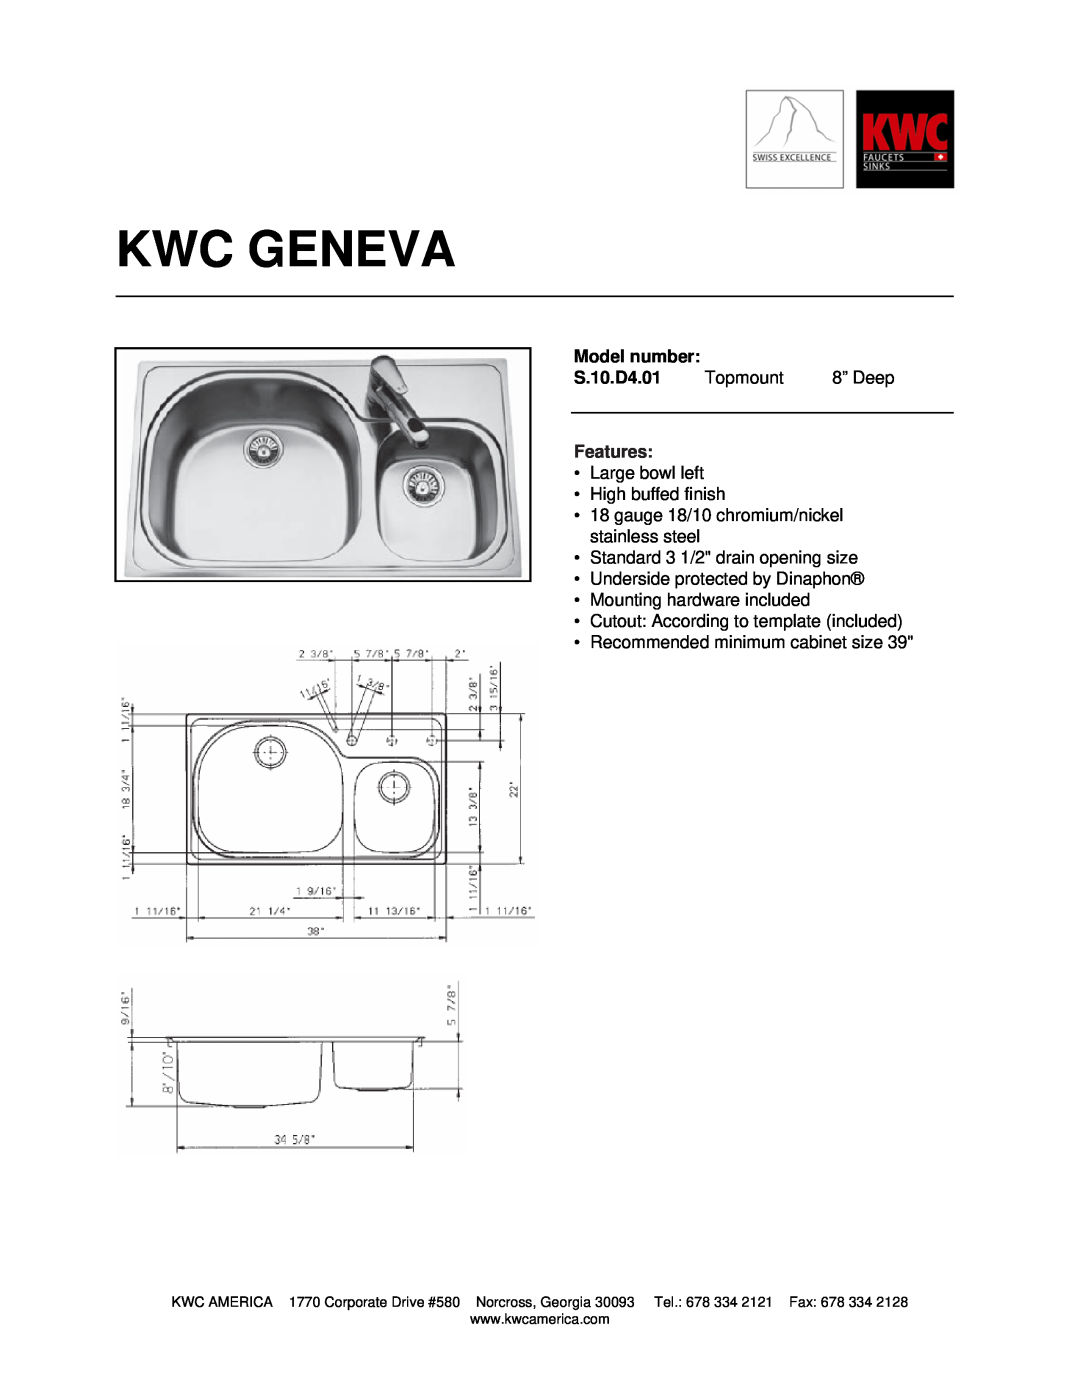 KWC S.10.D4.01 manual Kwc Geneva, Model number, Features 